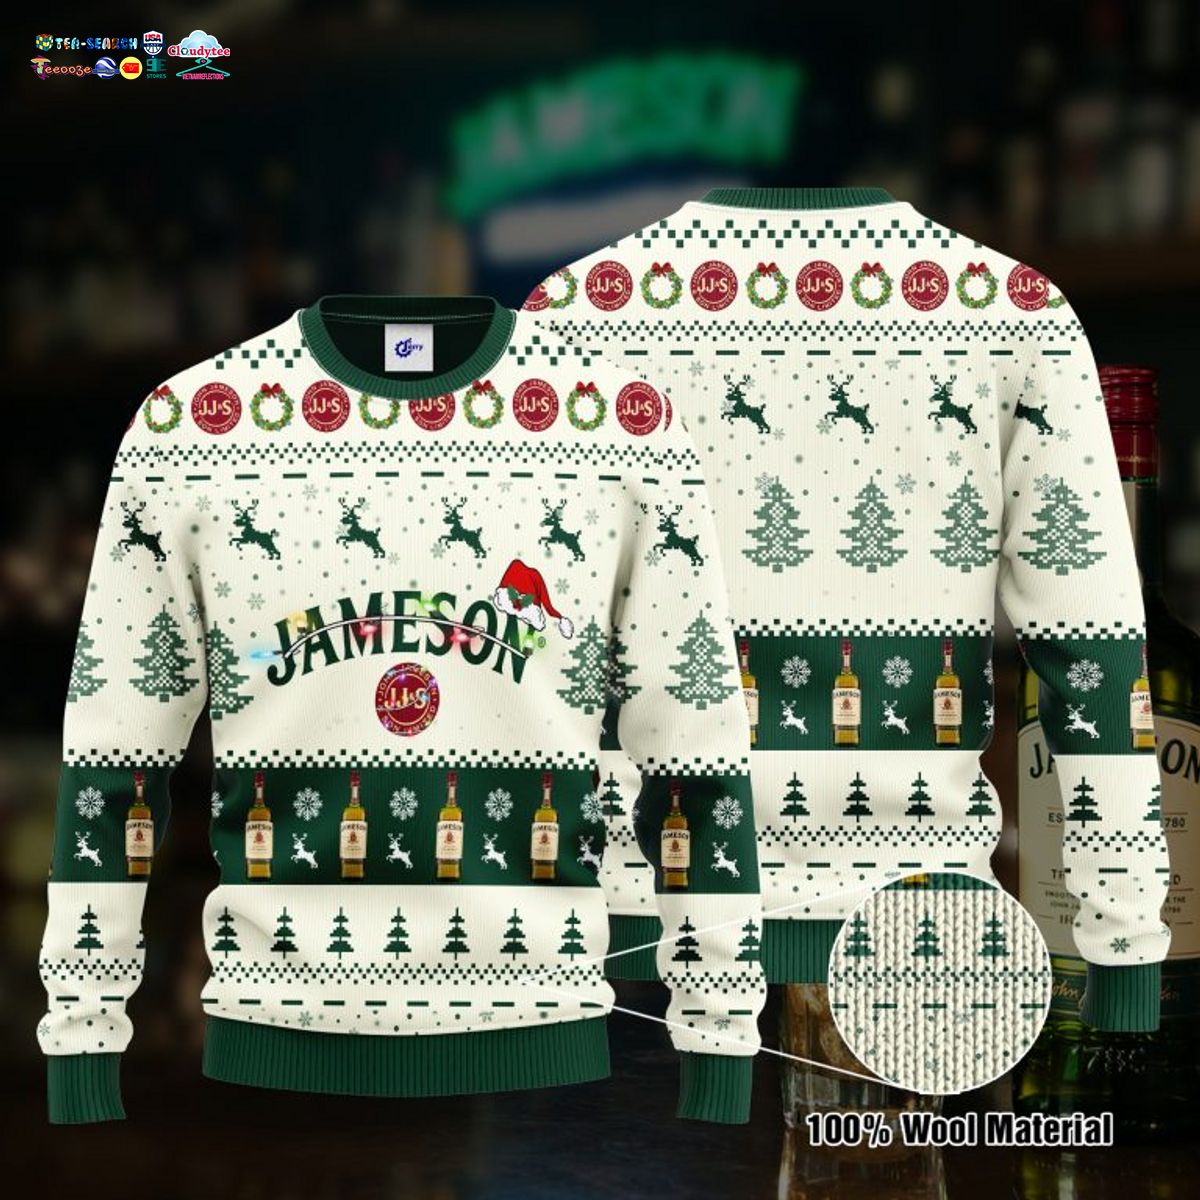 jameson-santa-hat-ugly-christmas-sweater-1-s73no.jpg